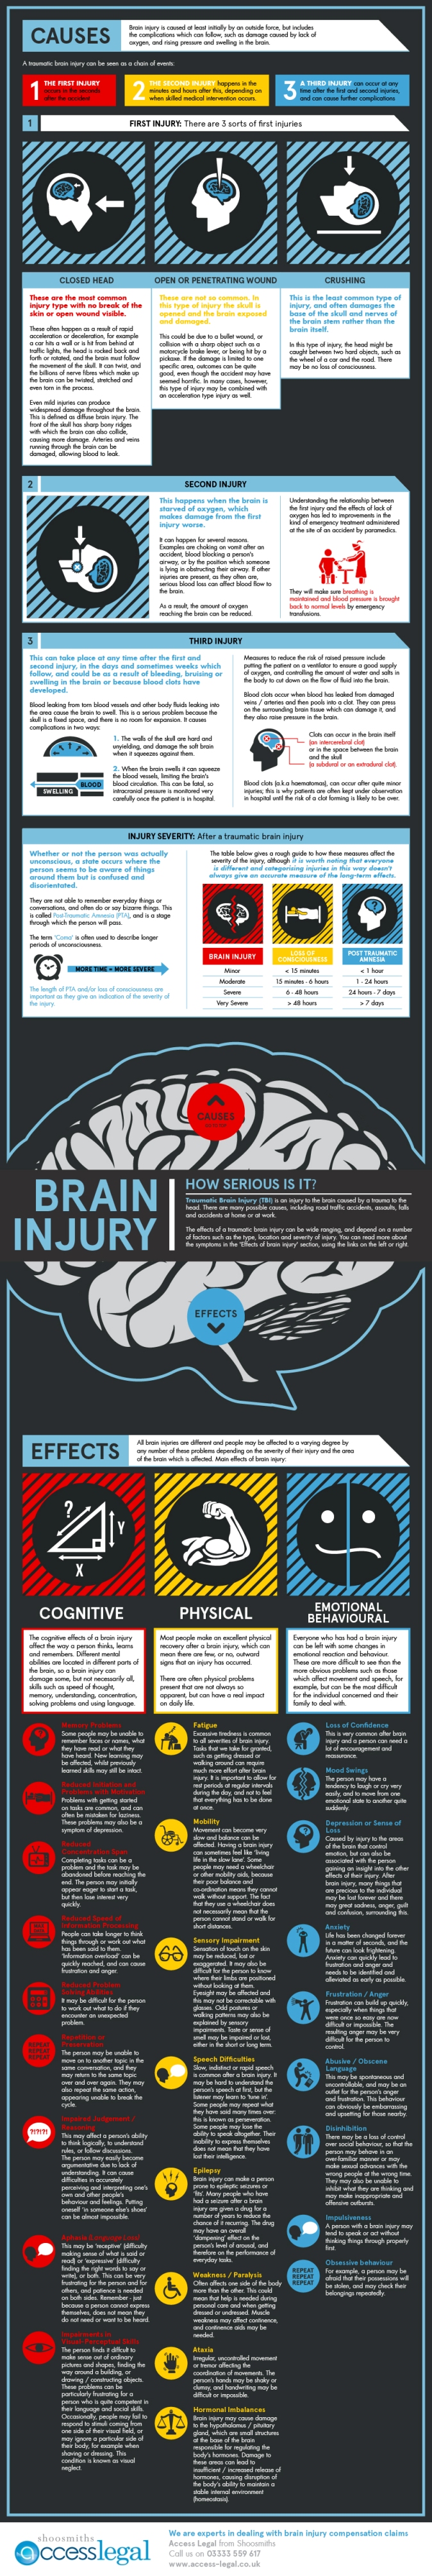 brain-injury--how-serious-is-it_5061954cebacb